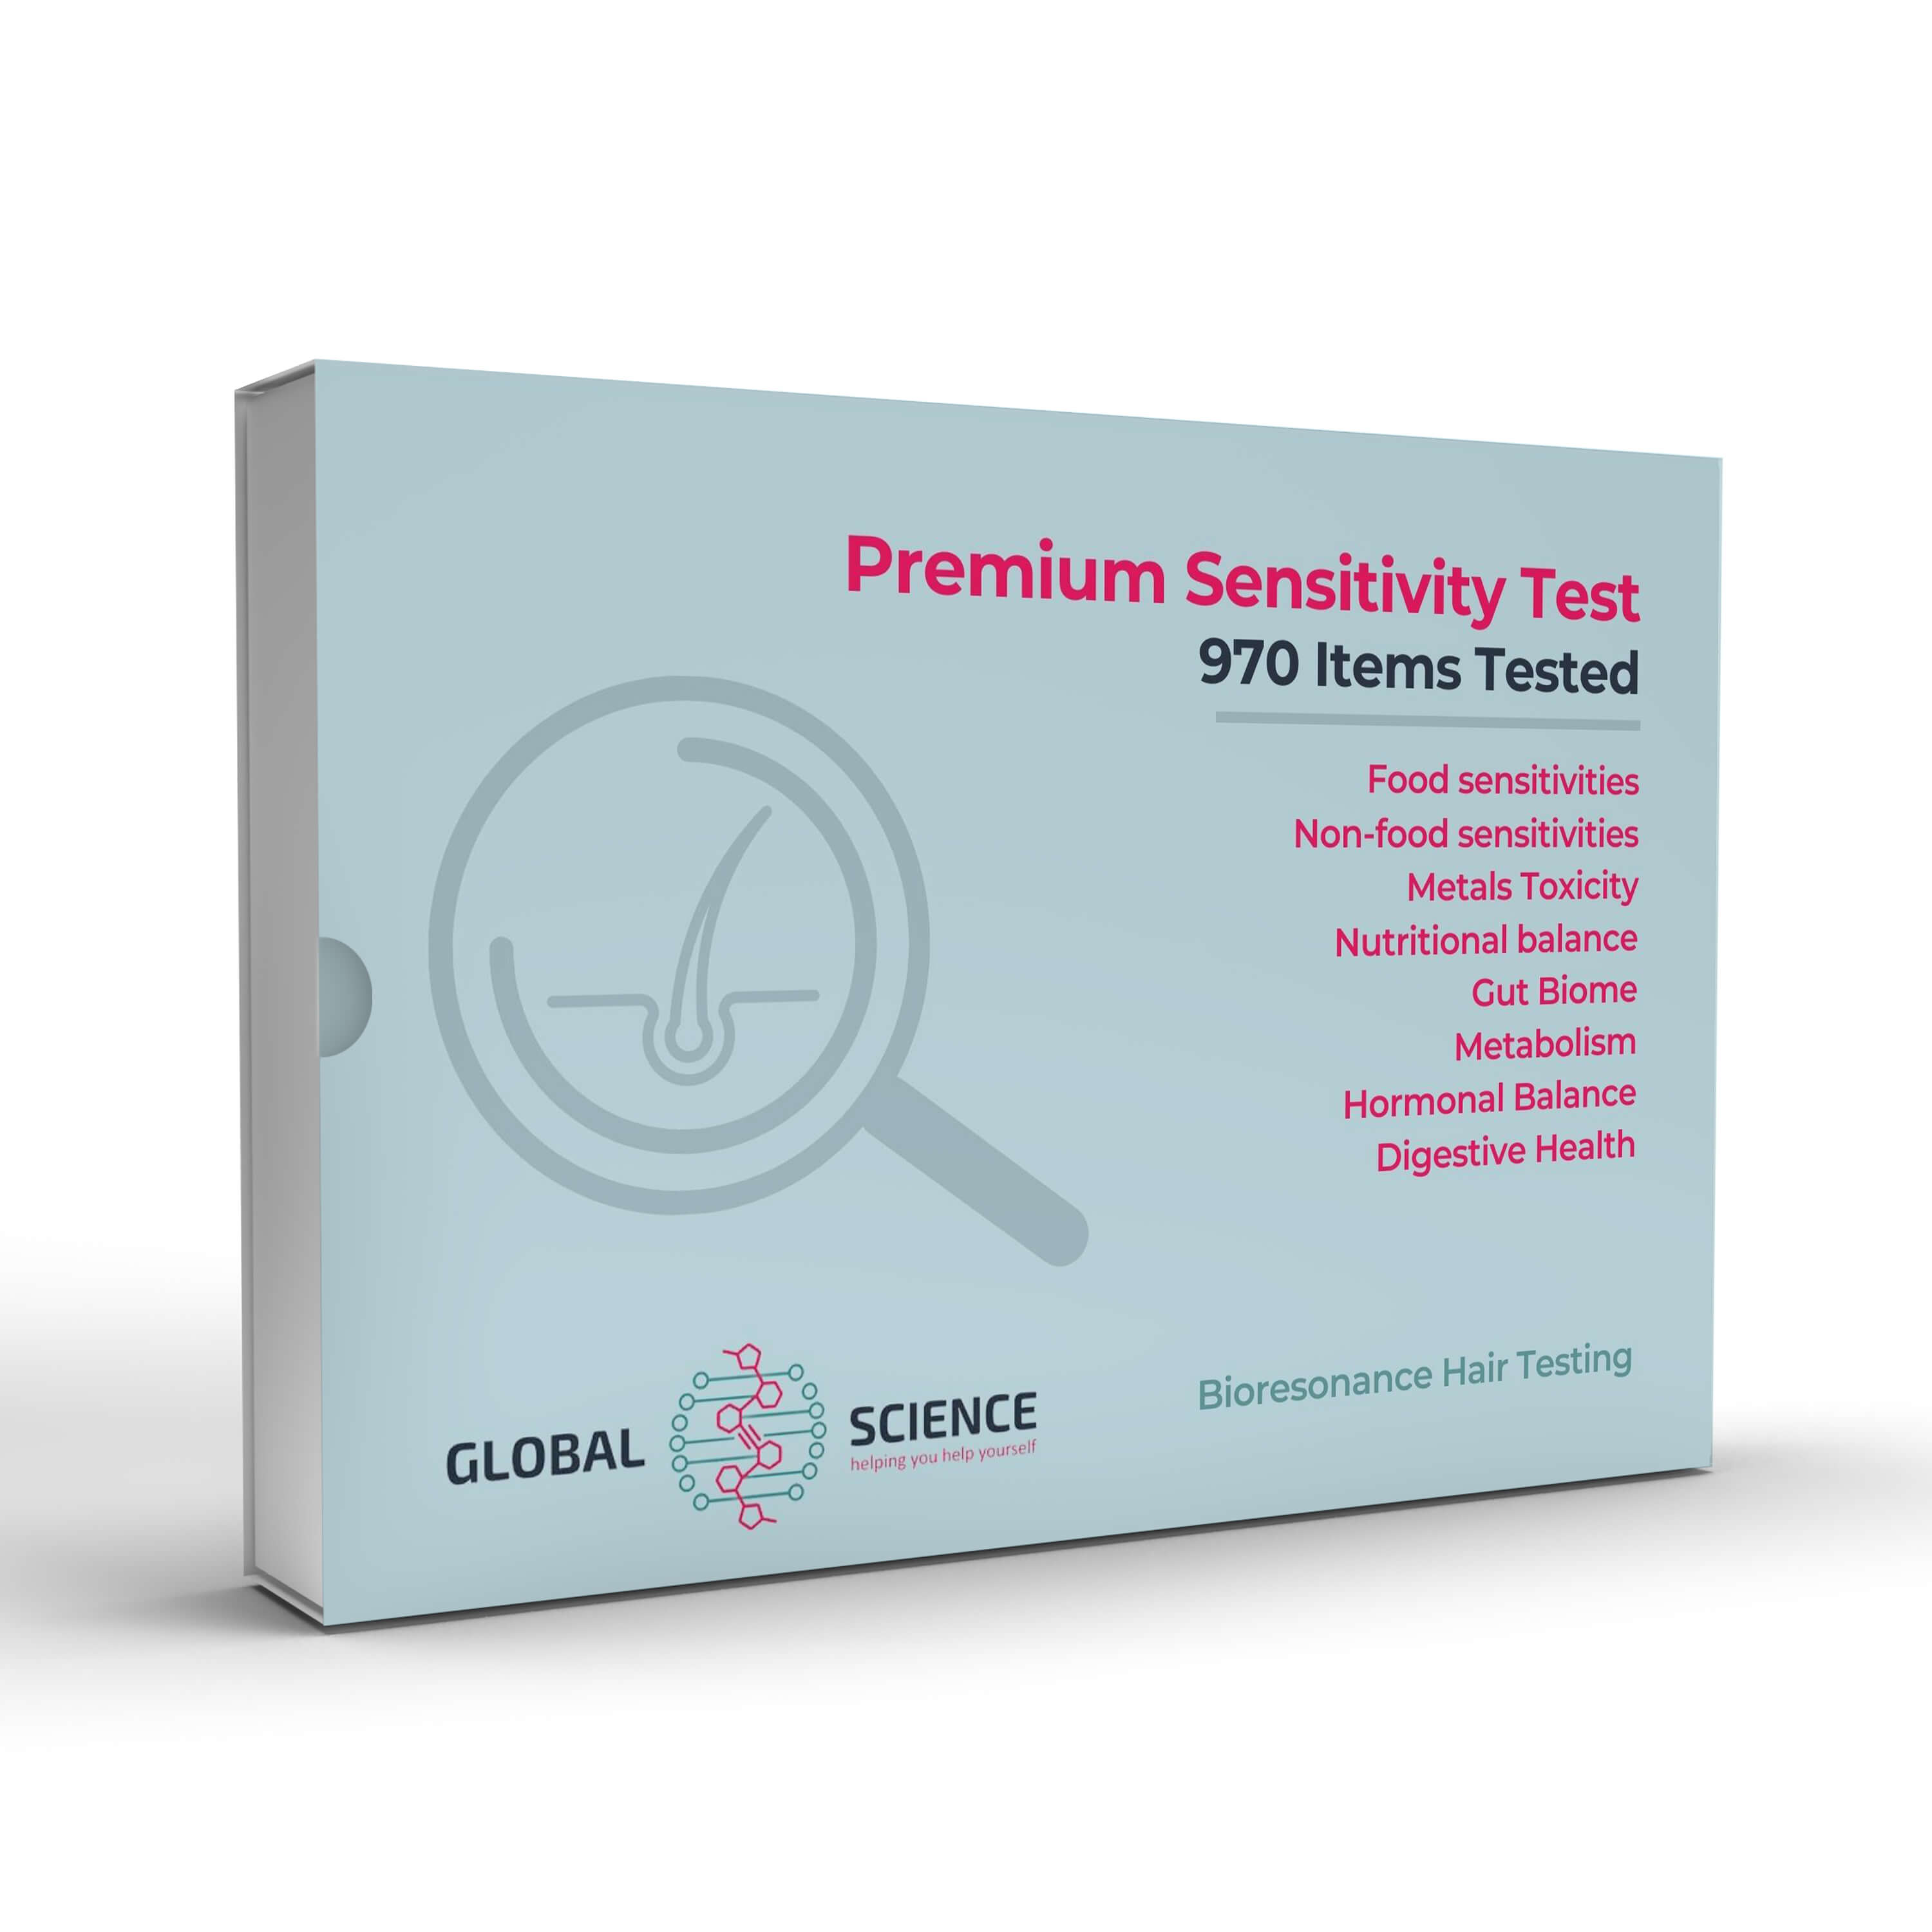 Premium Sensitivity 970 Mock Up Kit.png - Allergy, Intolerance and Bioresonance Testing Labs